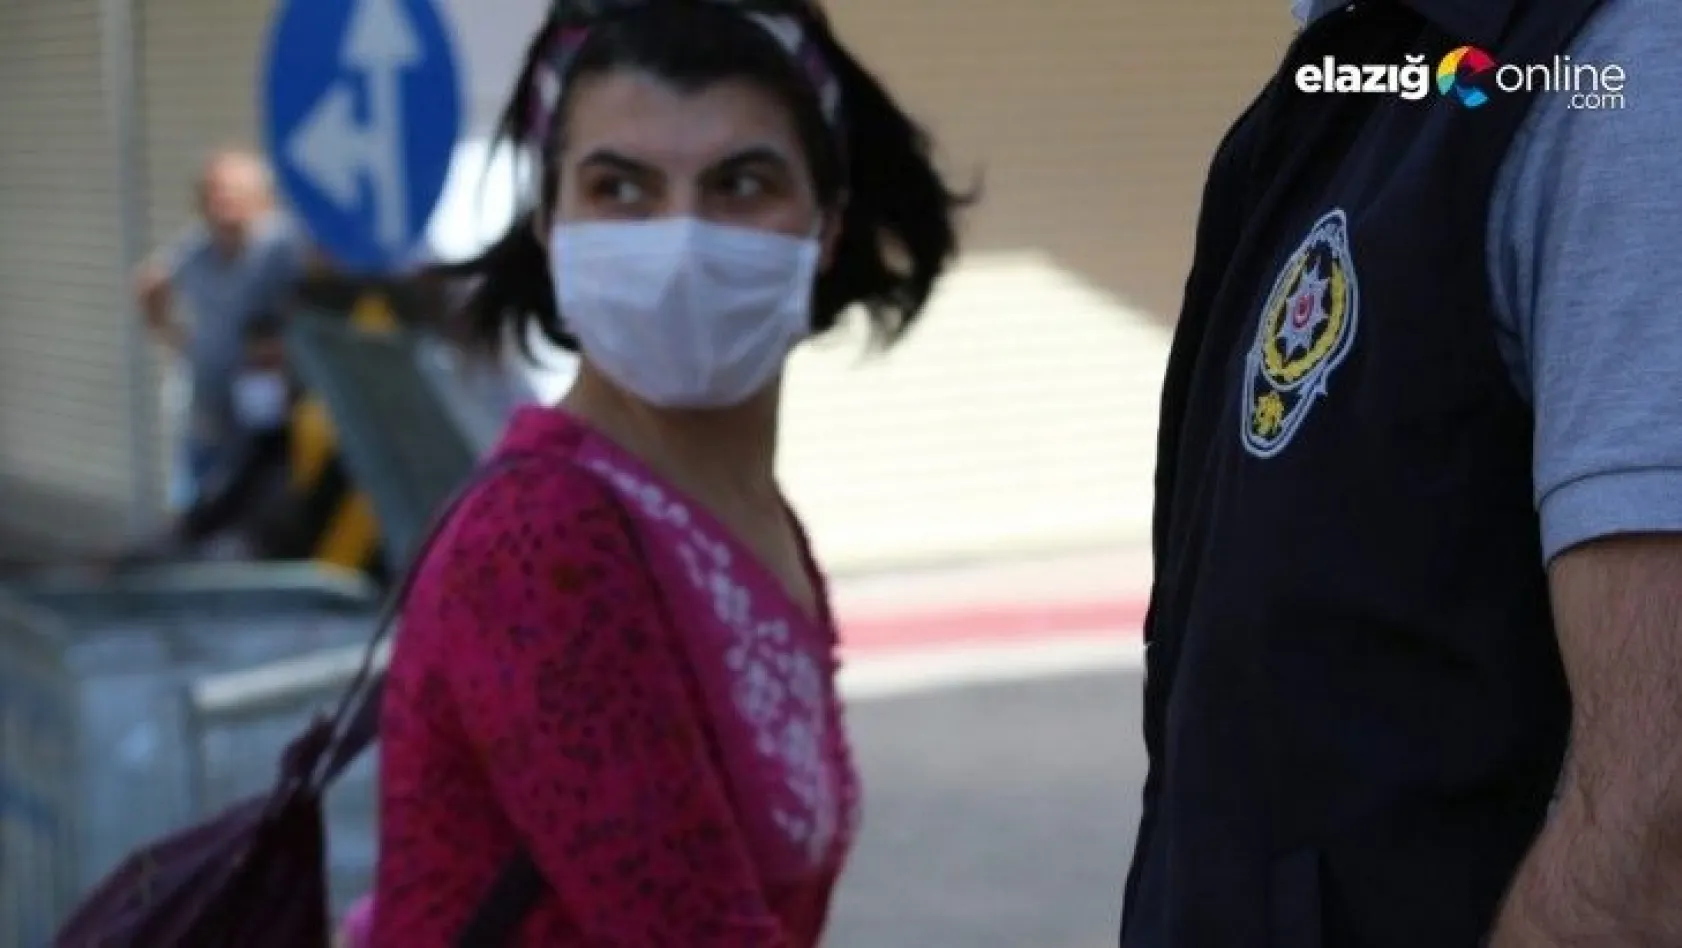 Elazığ'da maske takmayana 800 TL ceza